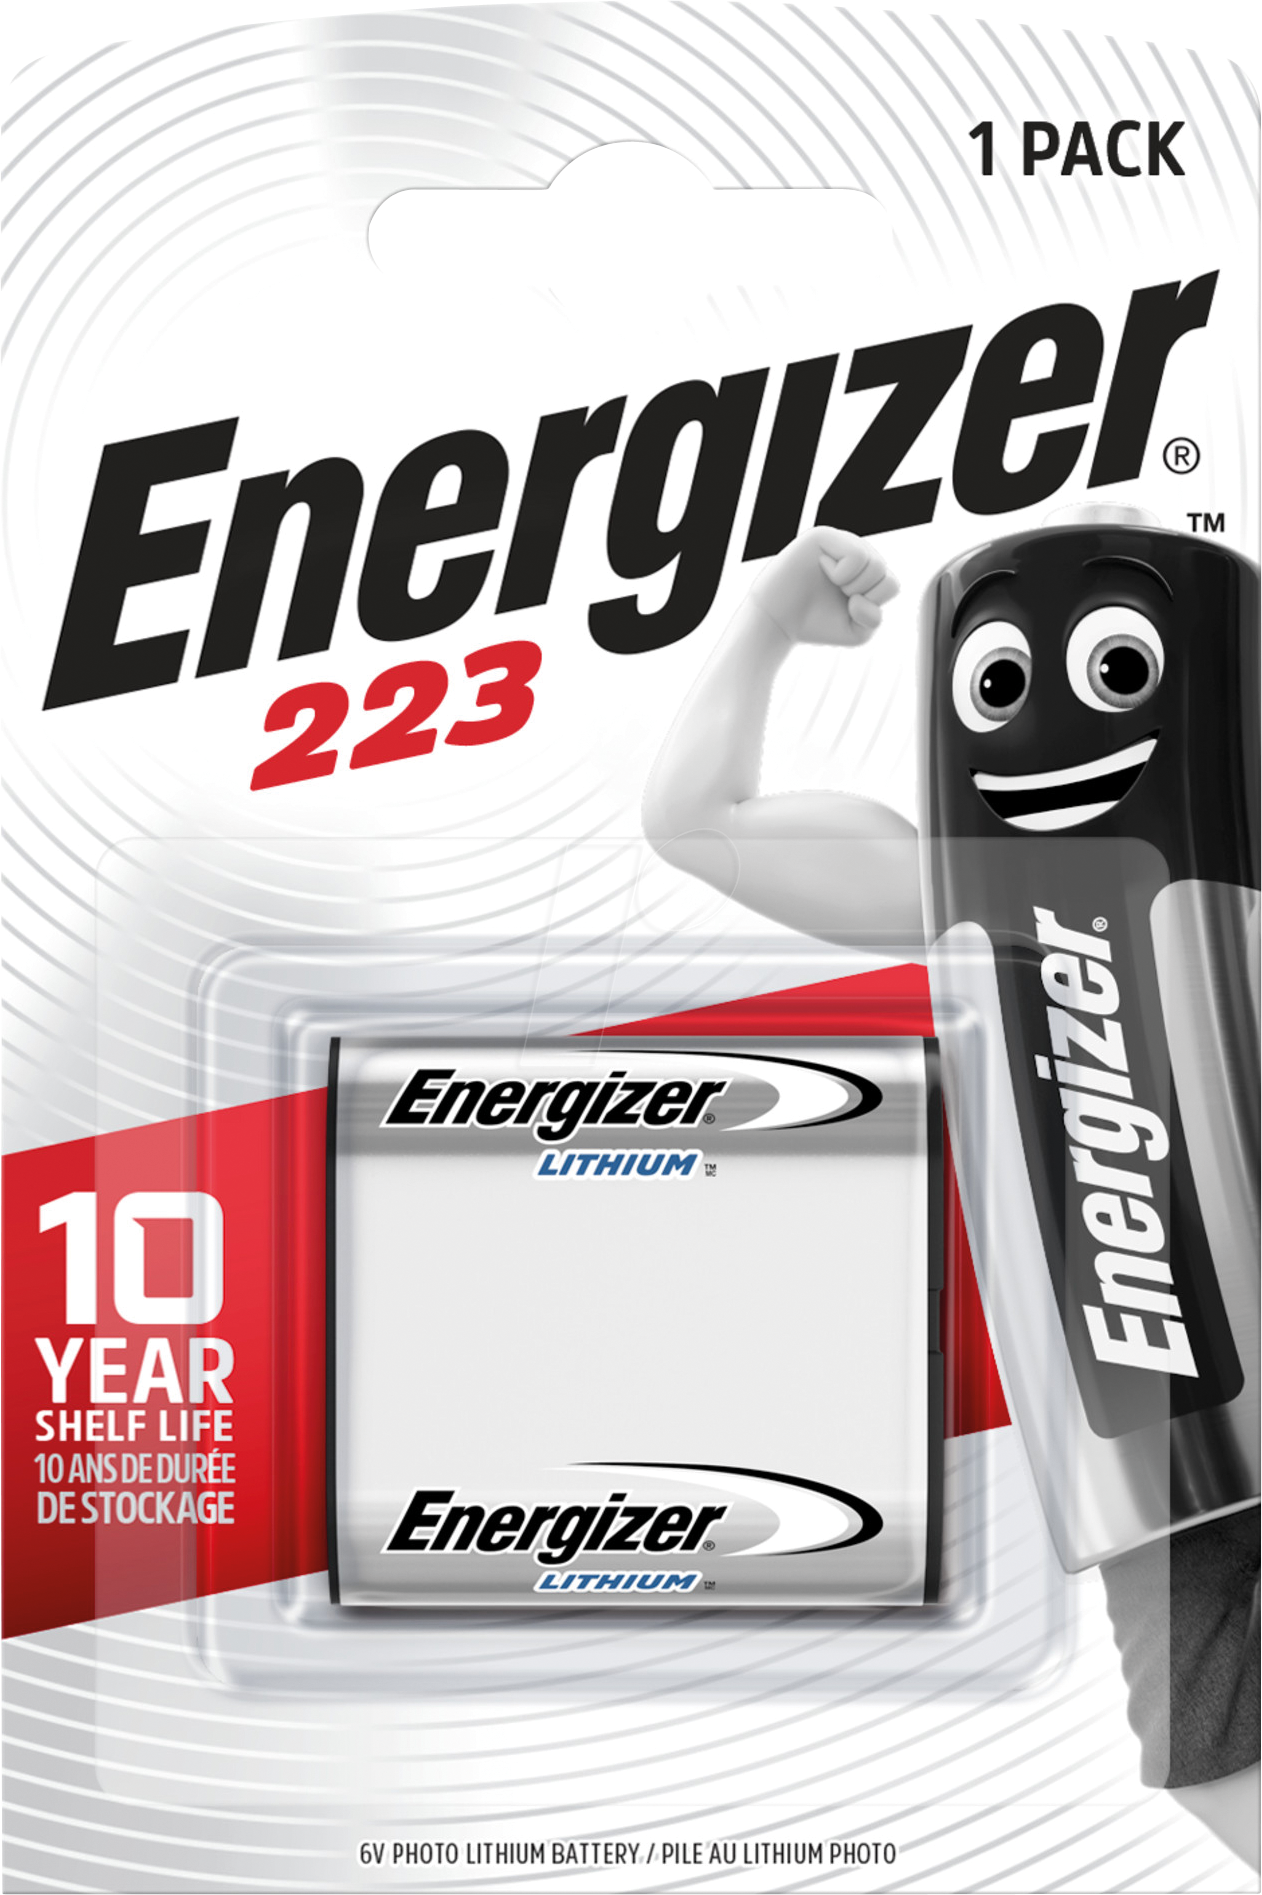 EN 1X223 - Lithium Batterie, 223, 1500 mAh, 1er-Pack von Energizer